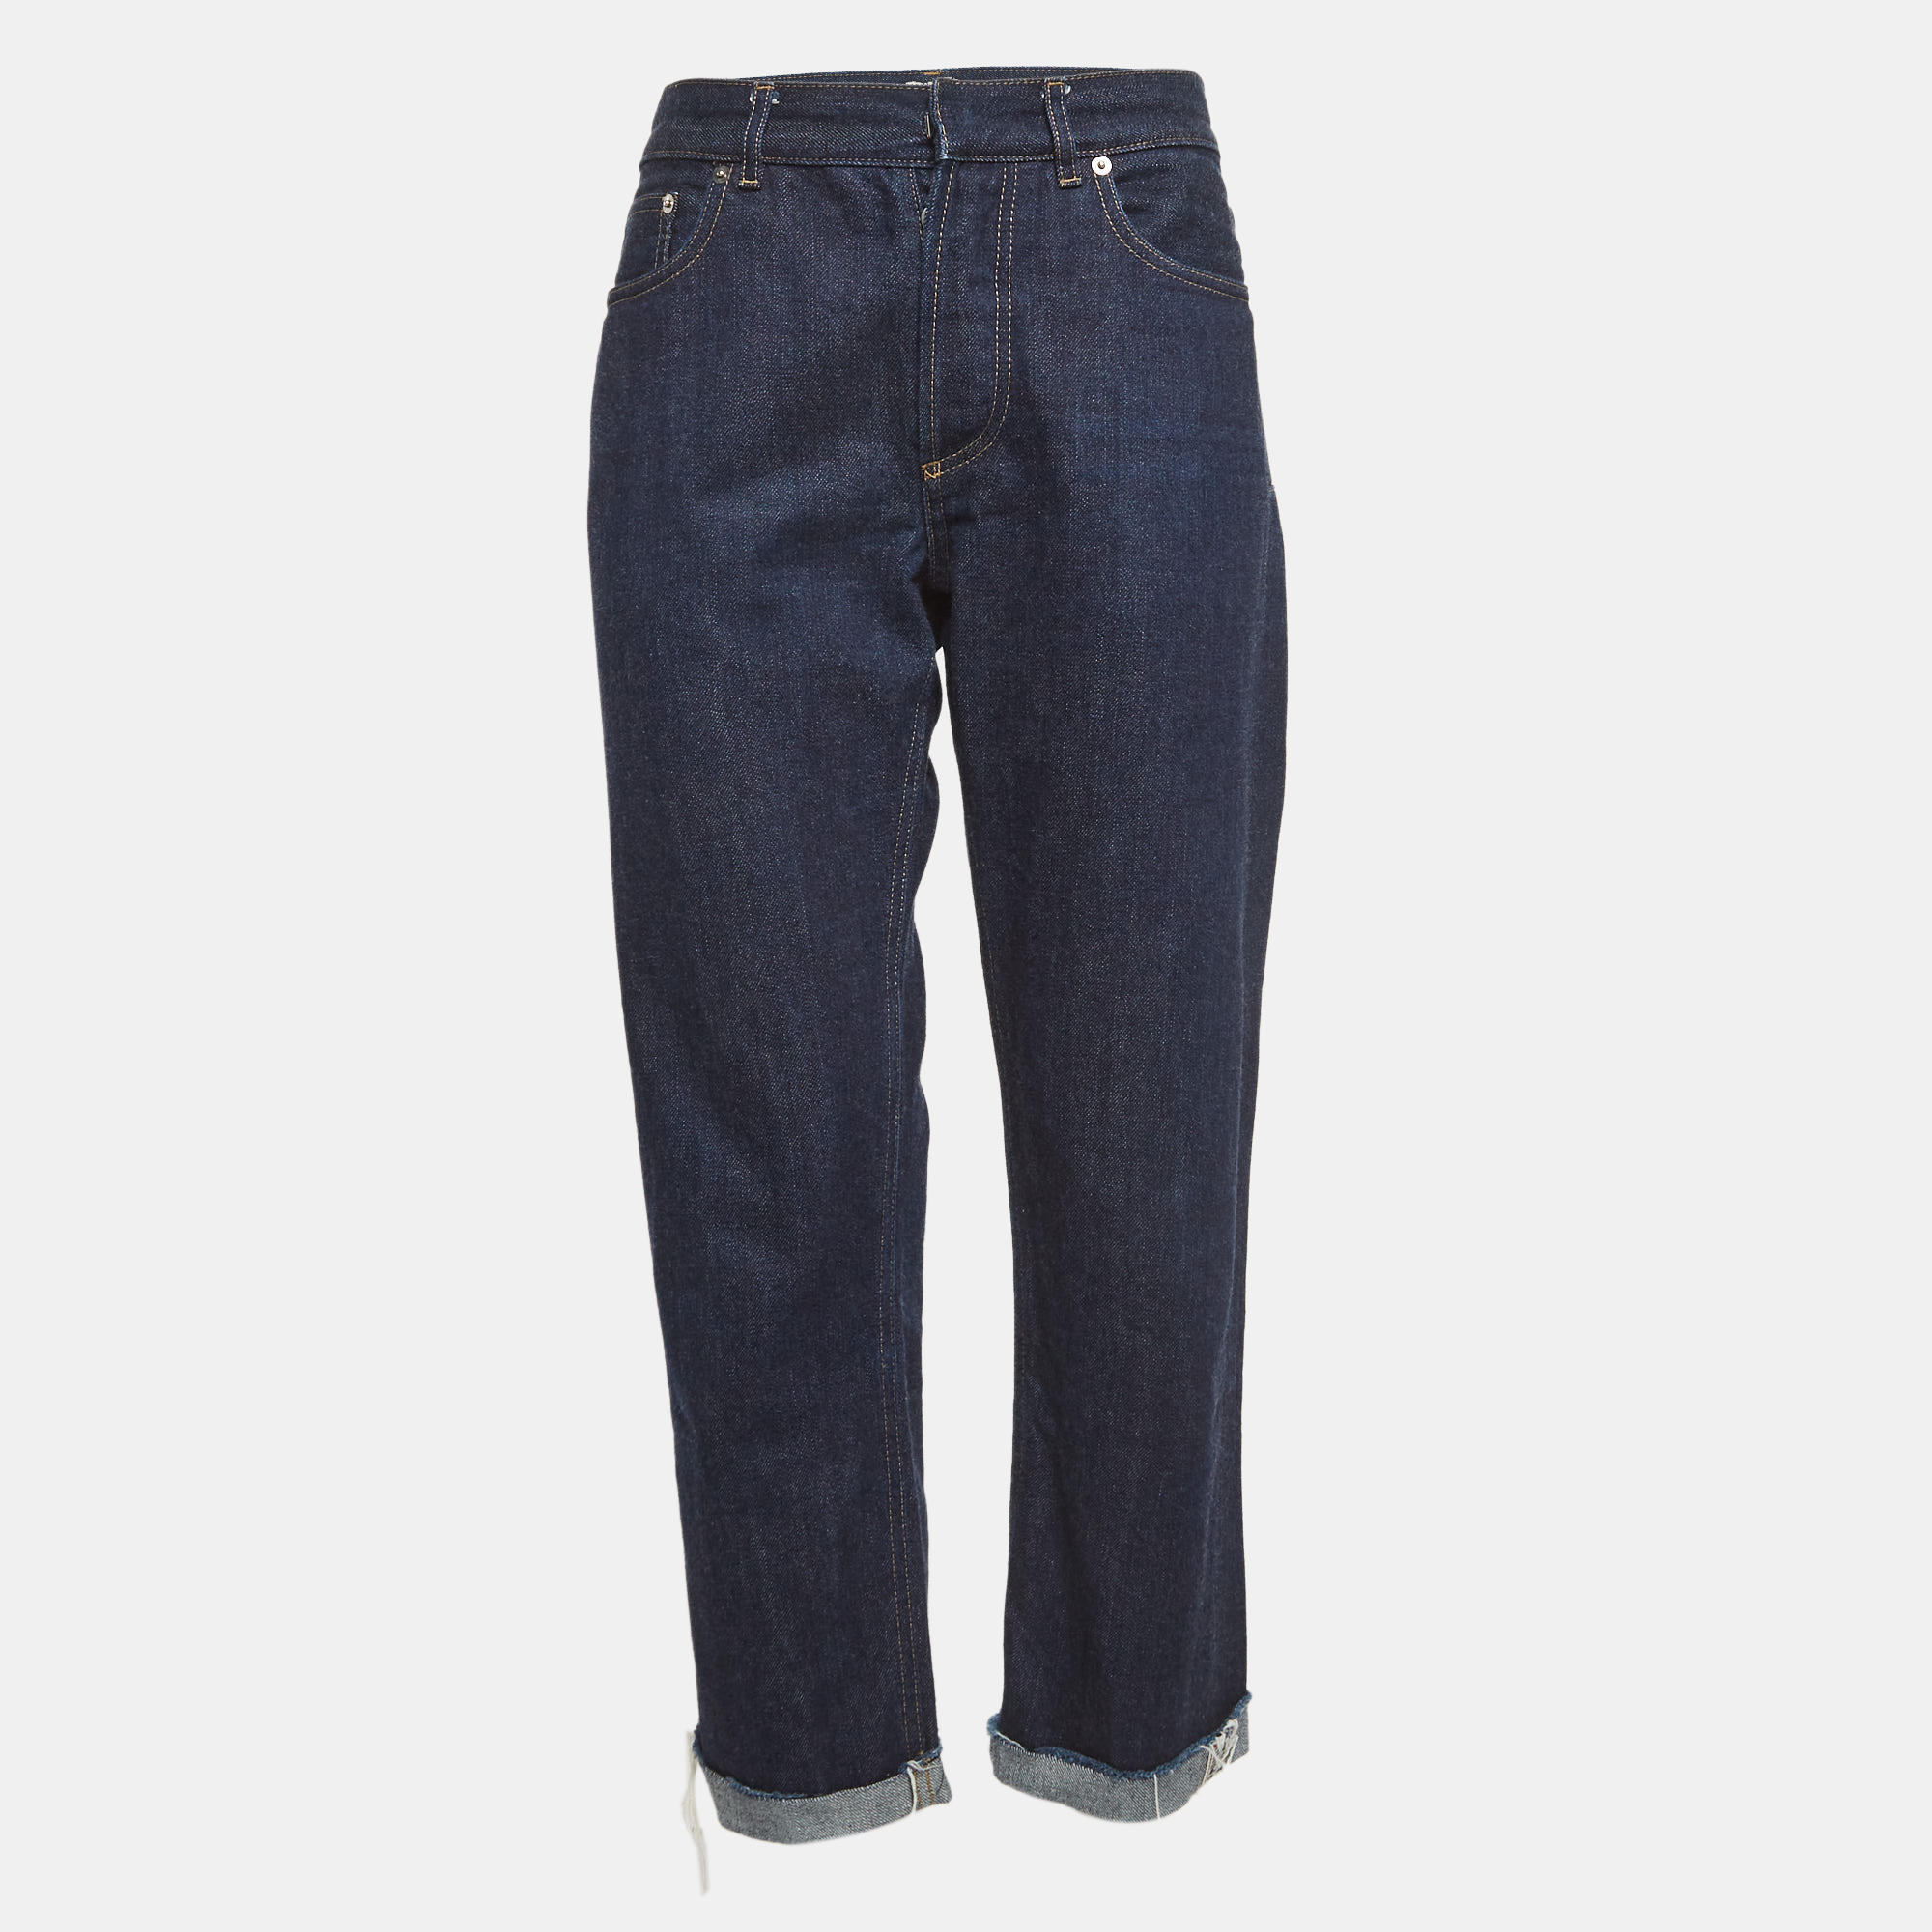 Christian dior navy blue raw edge denim jeans m waist 34"